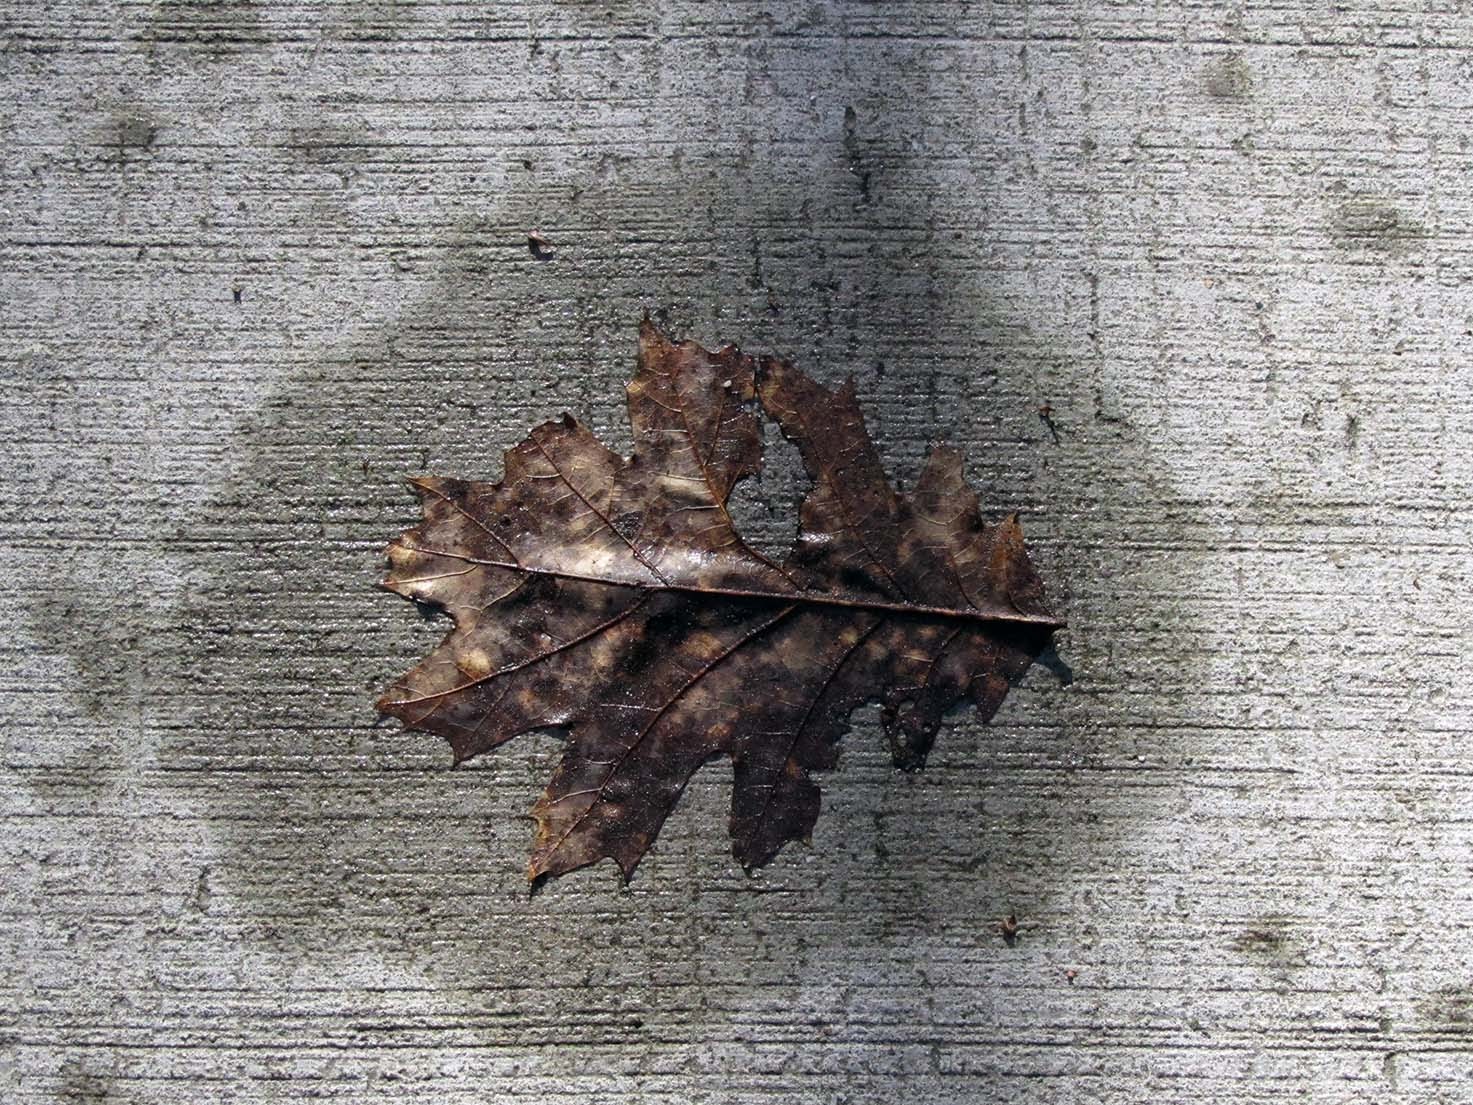 A leaf on a concrete path